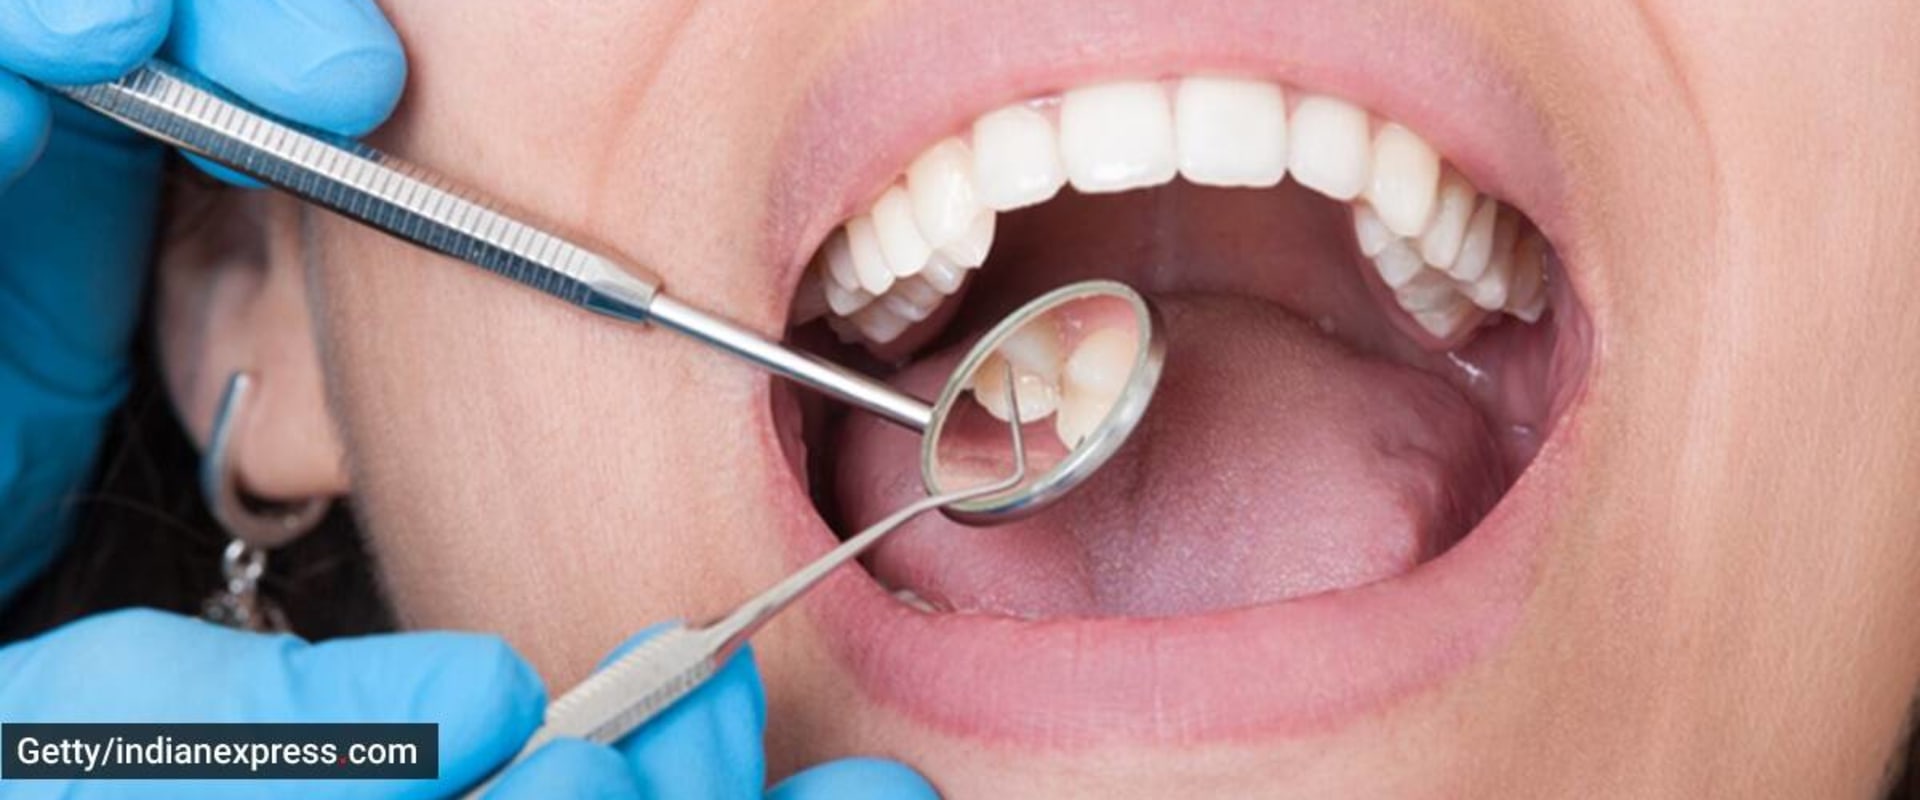 What dental health?